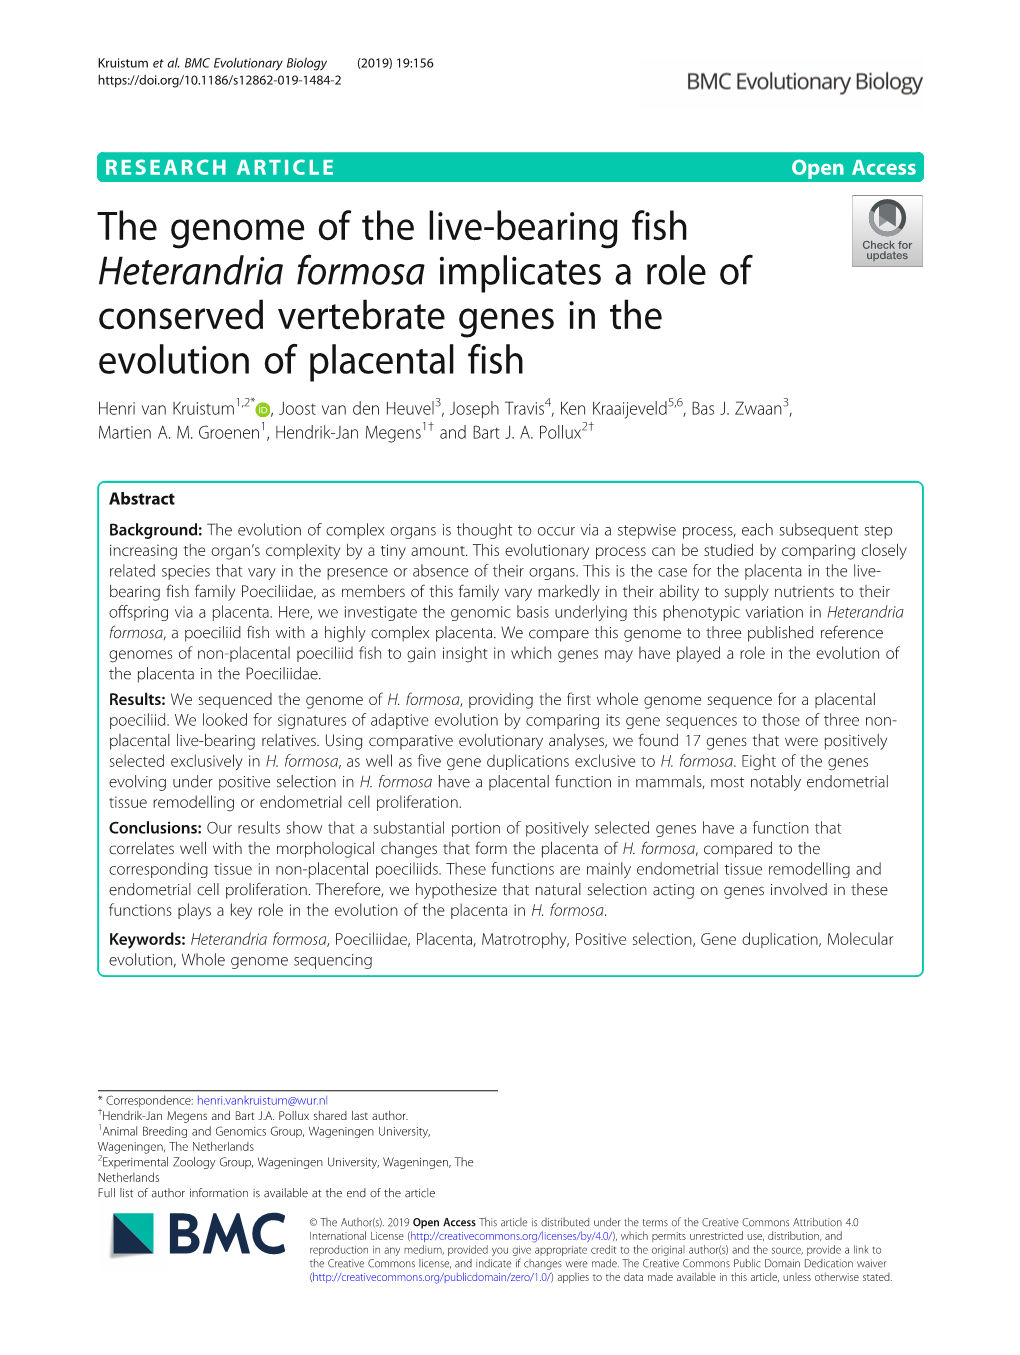 The Genome of the Live-Bearing Fish Heterandria Formosa Implicates A